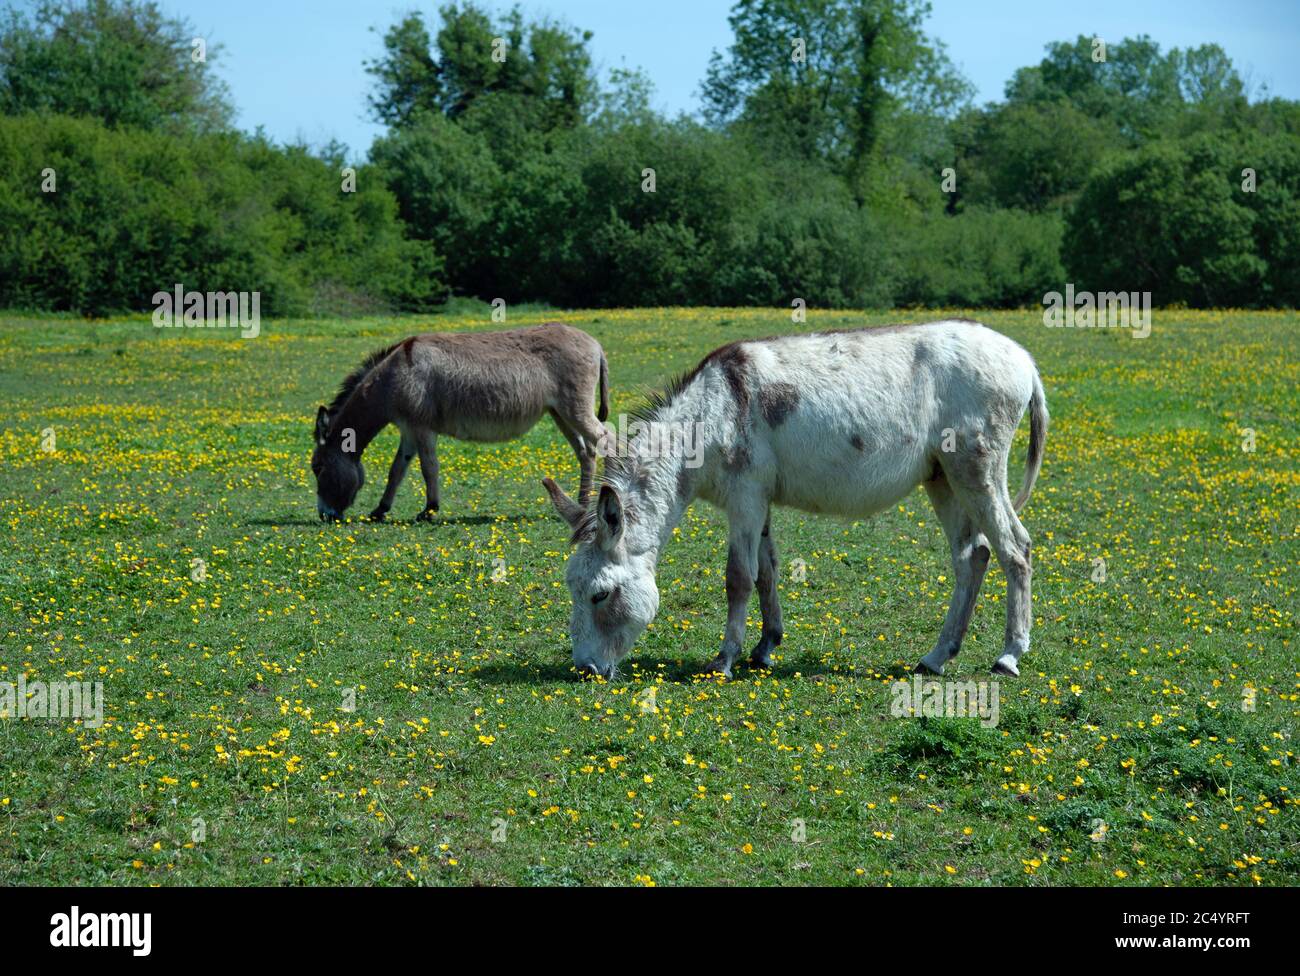 Donkeys on the field Stock Photo